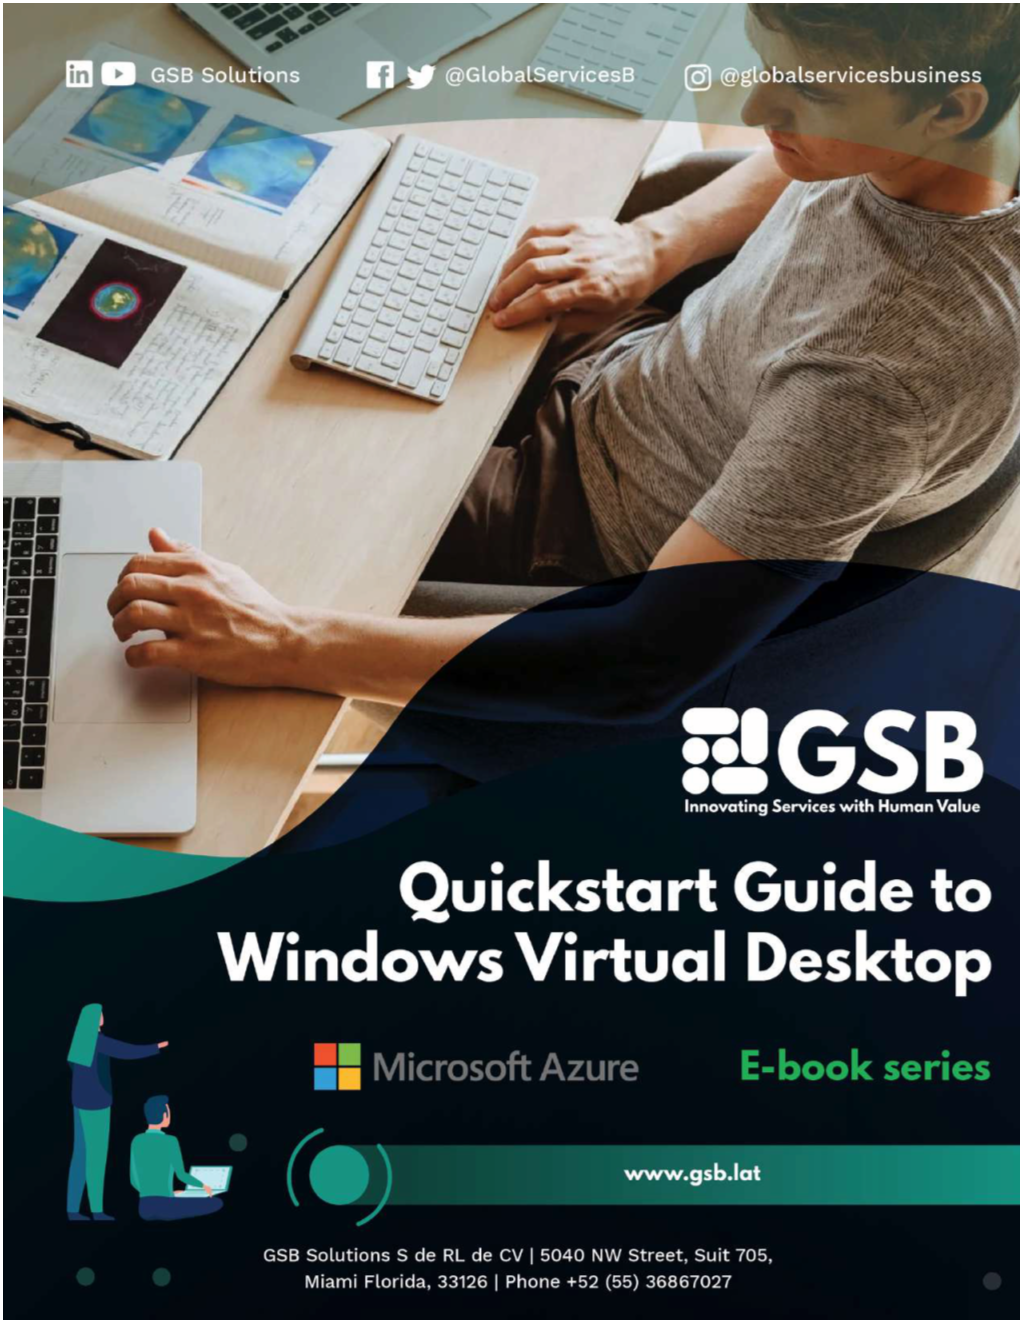 What Is Windows Virtual Desktop?